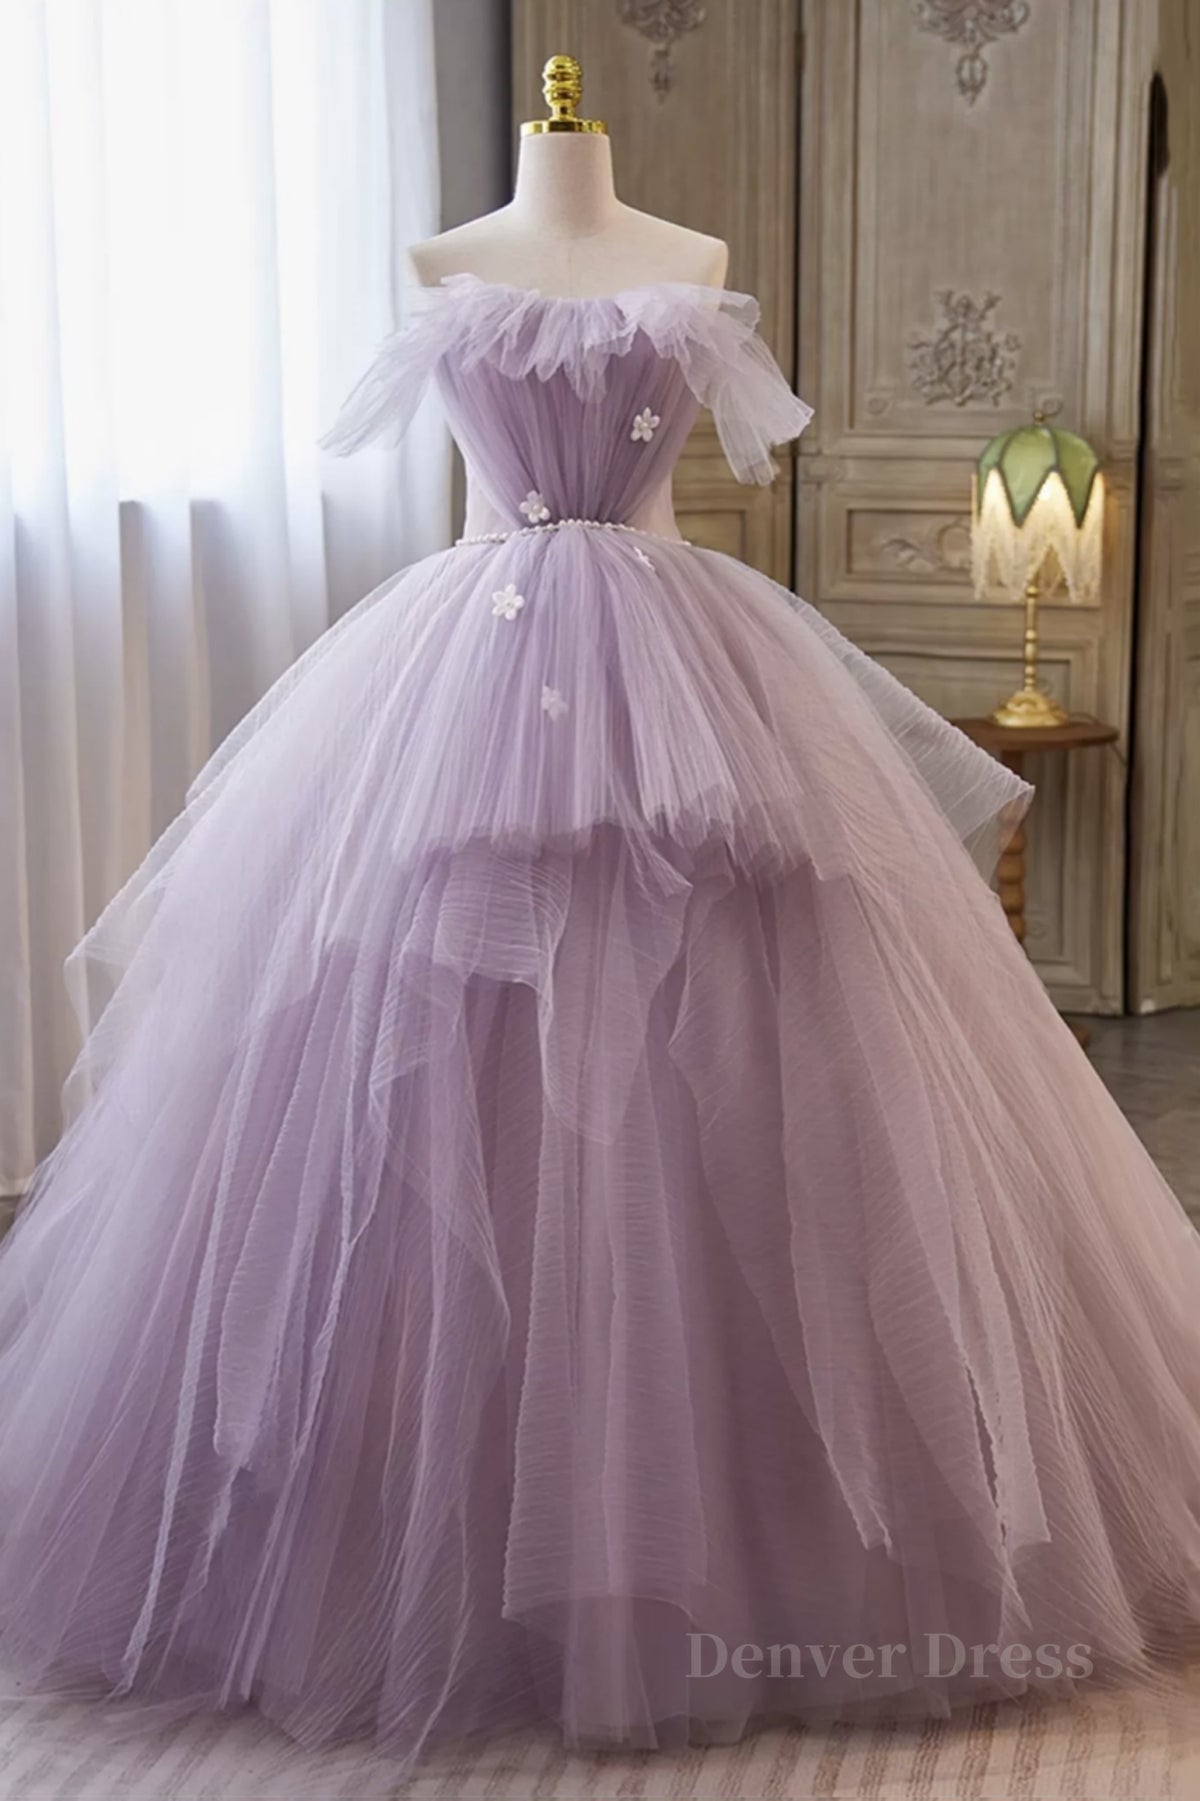 Princess Lavender Tulle Floral Long Prom Dress, Lavender Formal Evening Dress, Purple Ball Gown